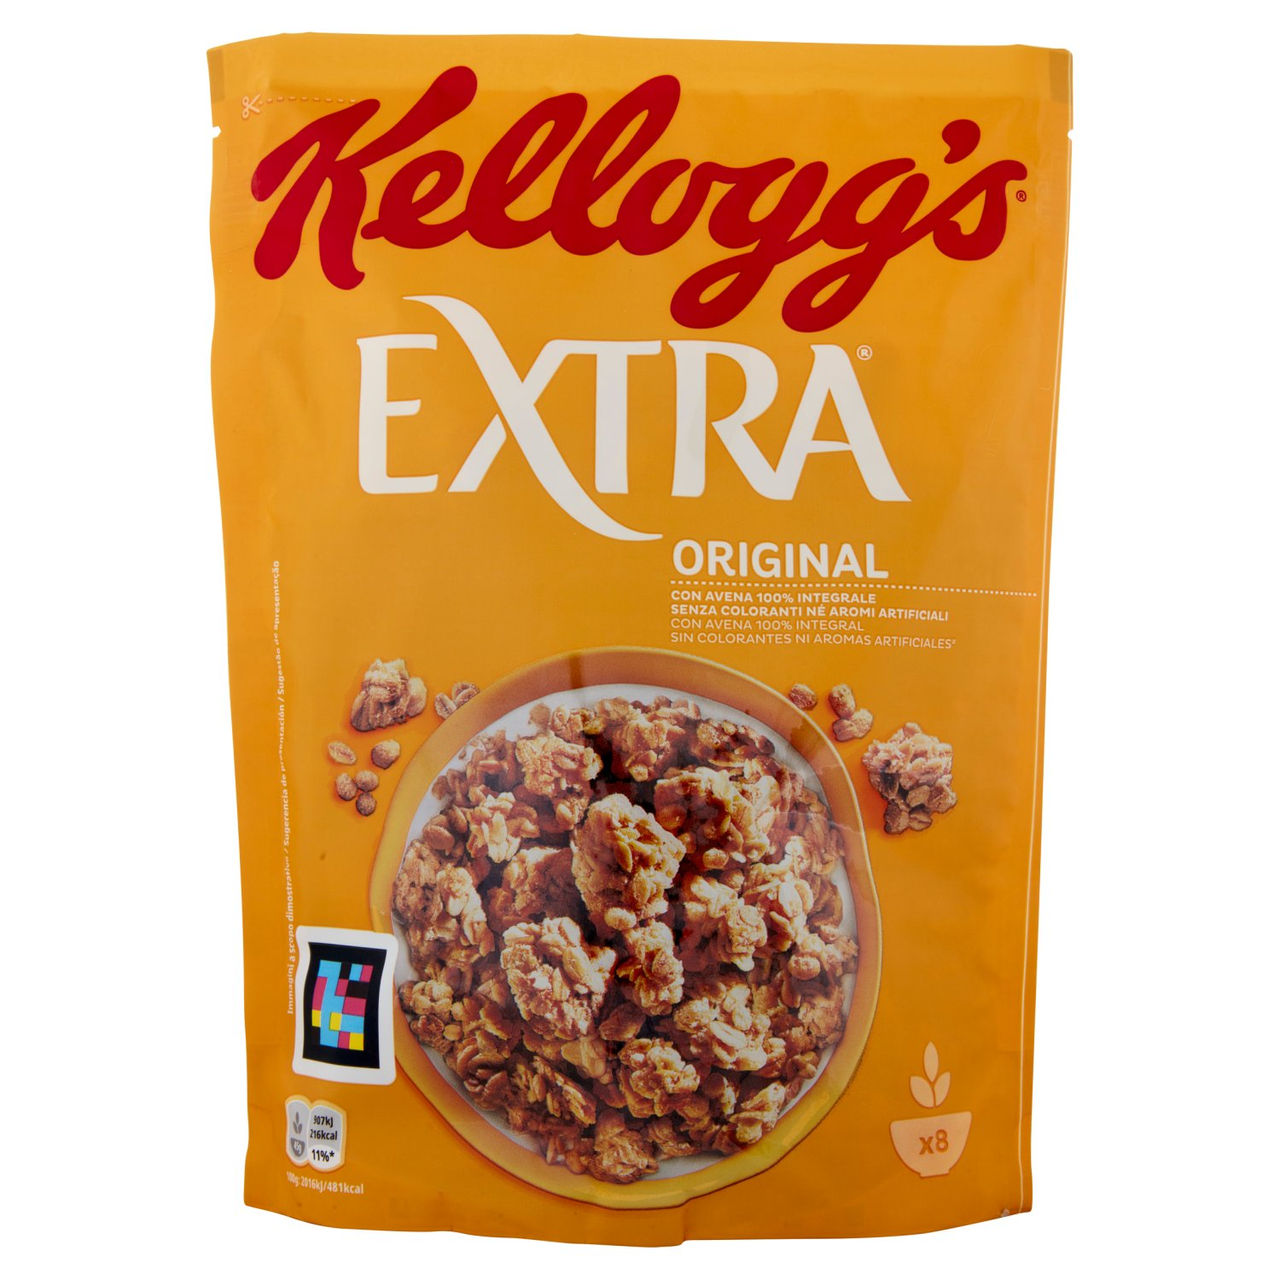 Kellogg's Extra Original 375 g Conad online